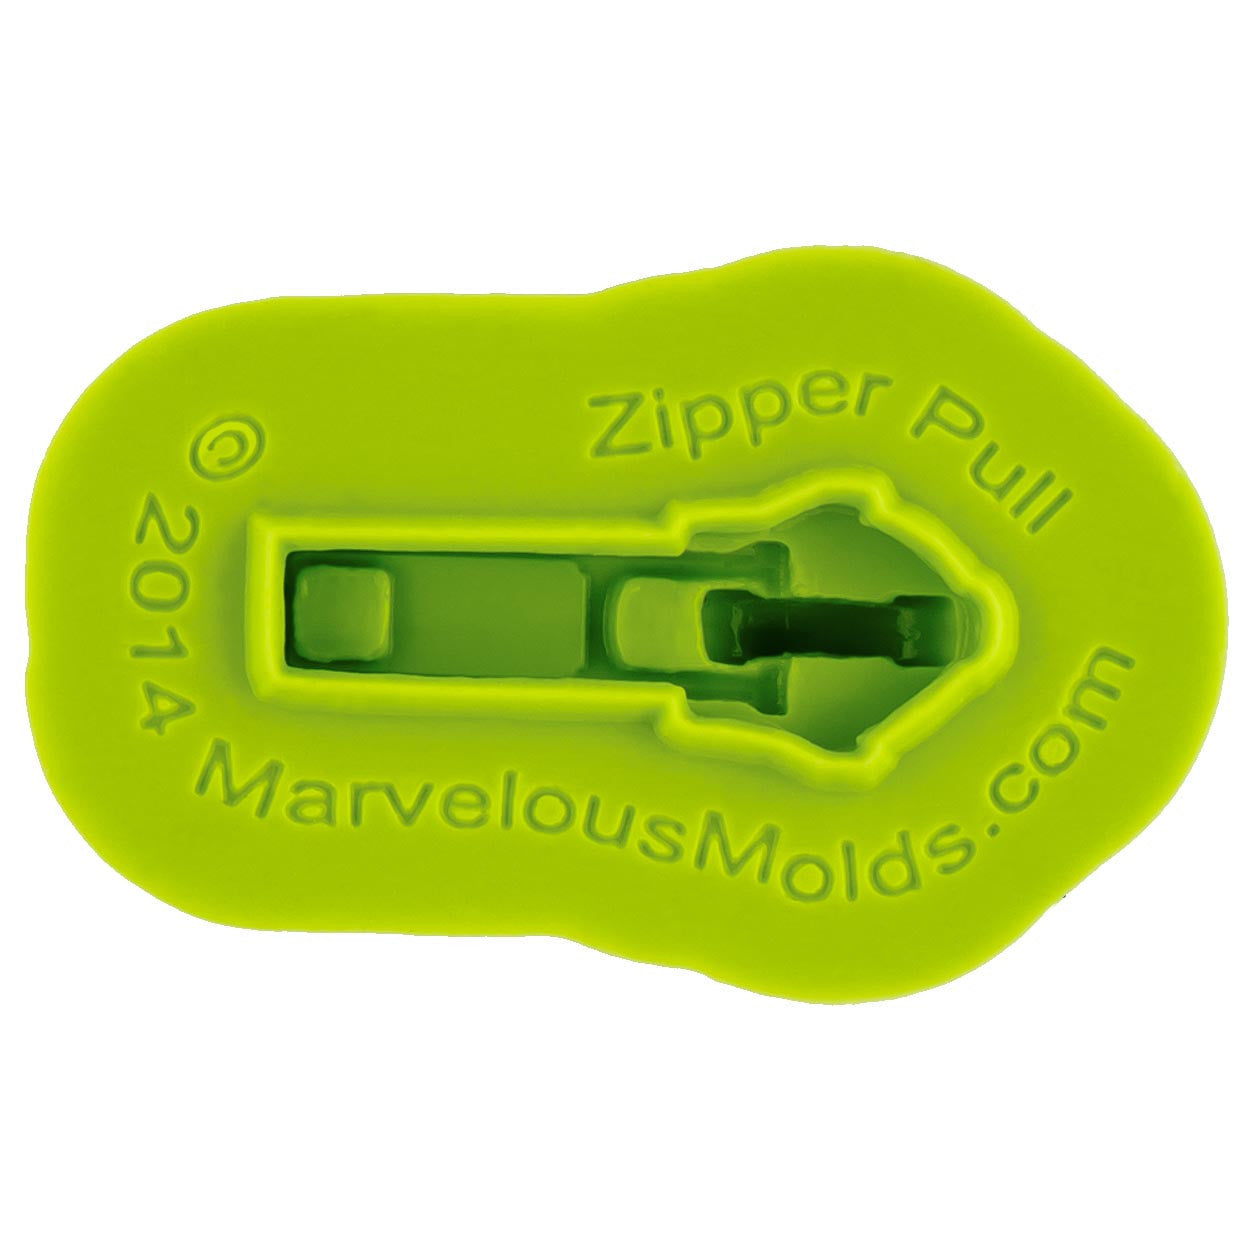 Zipper & Pull Mold